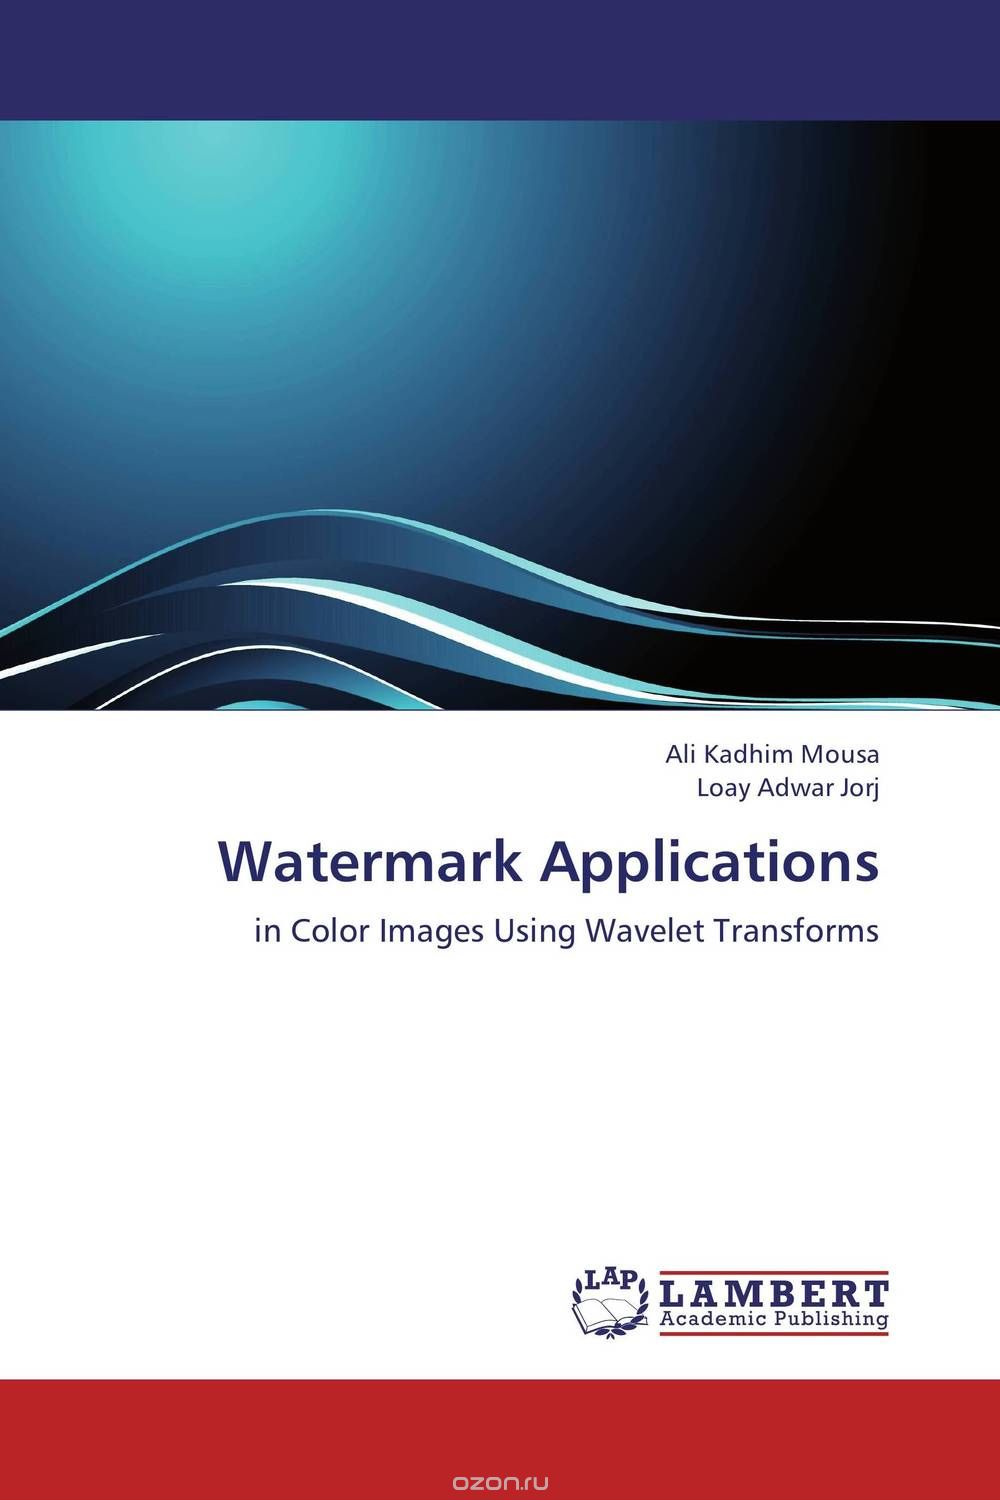 Скачать книгу "Watermark Applications"